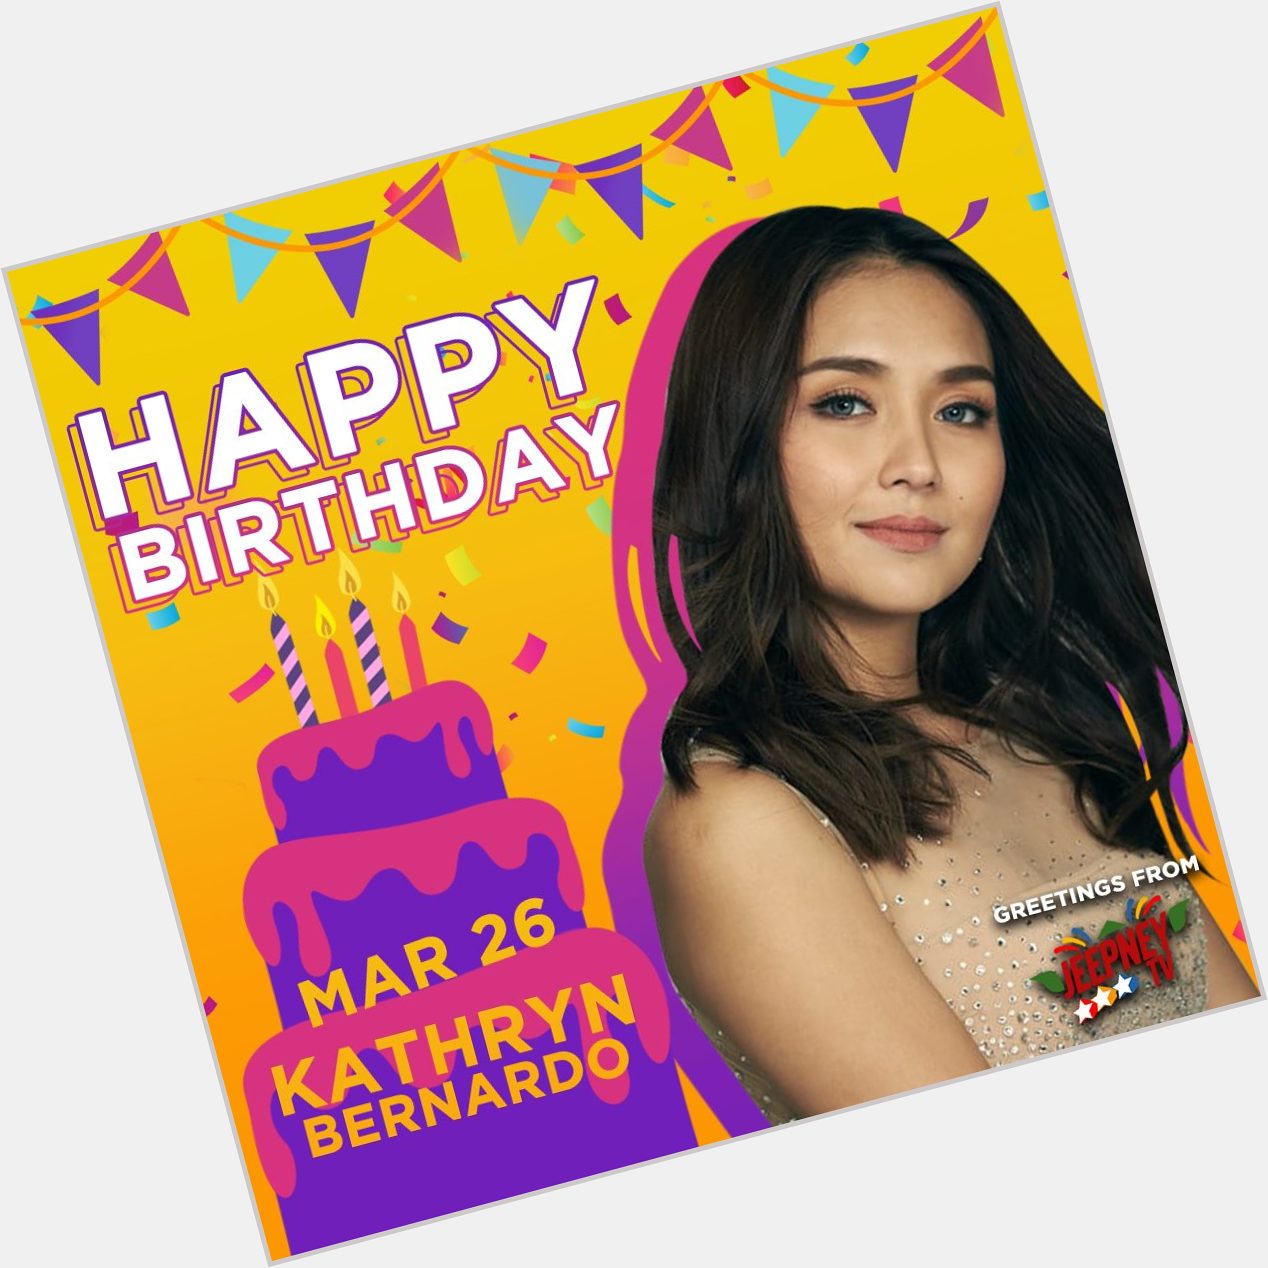 Happy birthday Kathryn Bernardo!  Greetings from Jeepney TV 